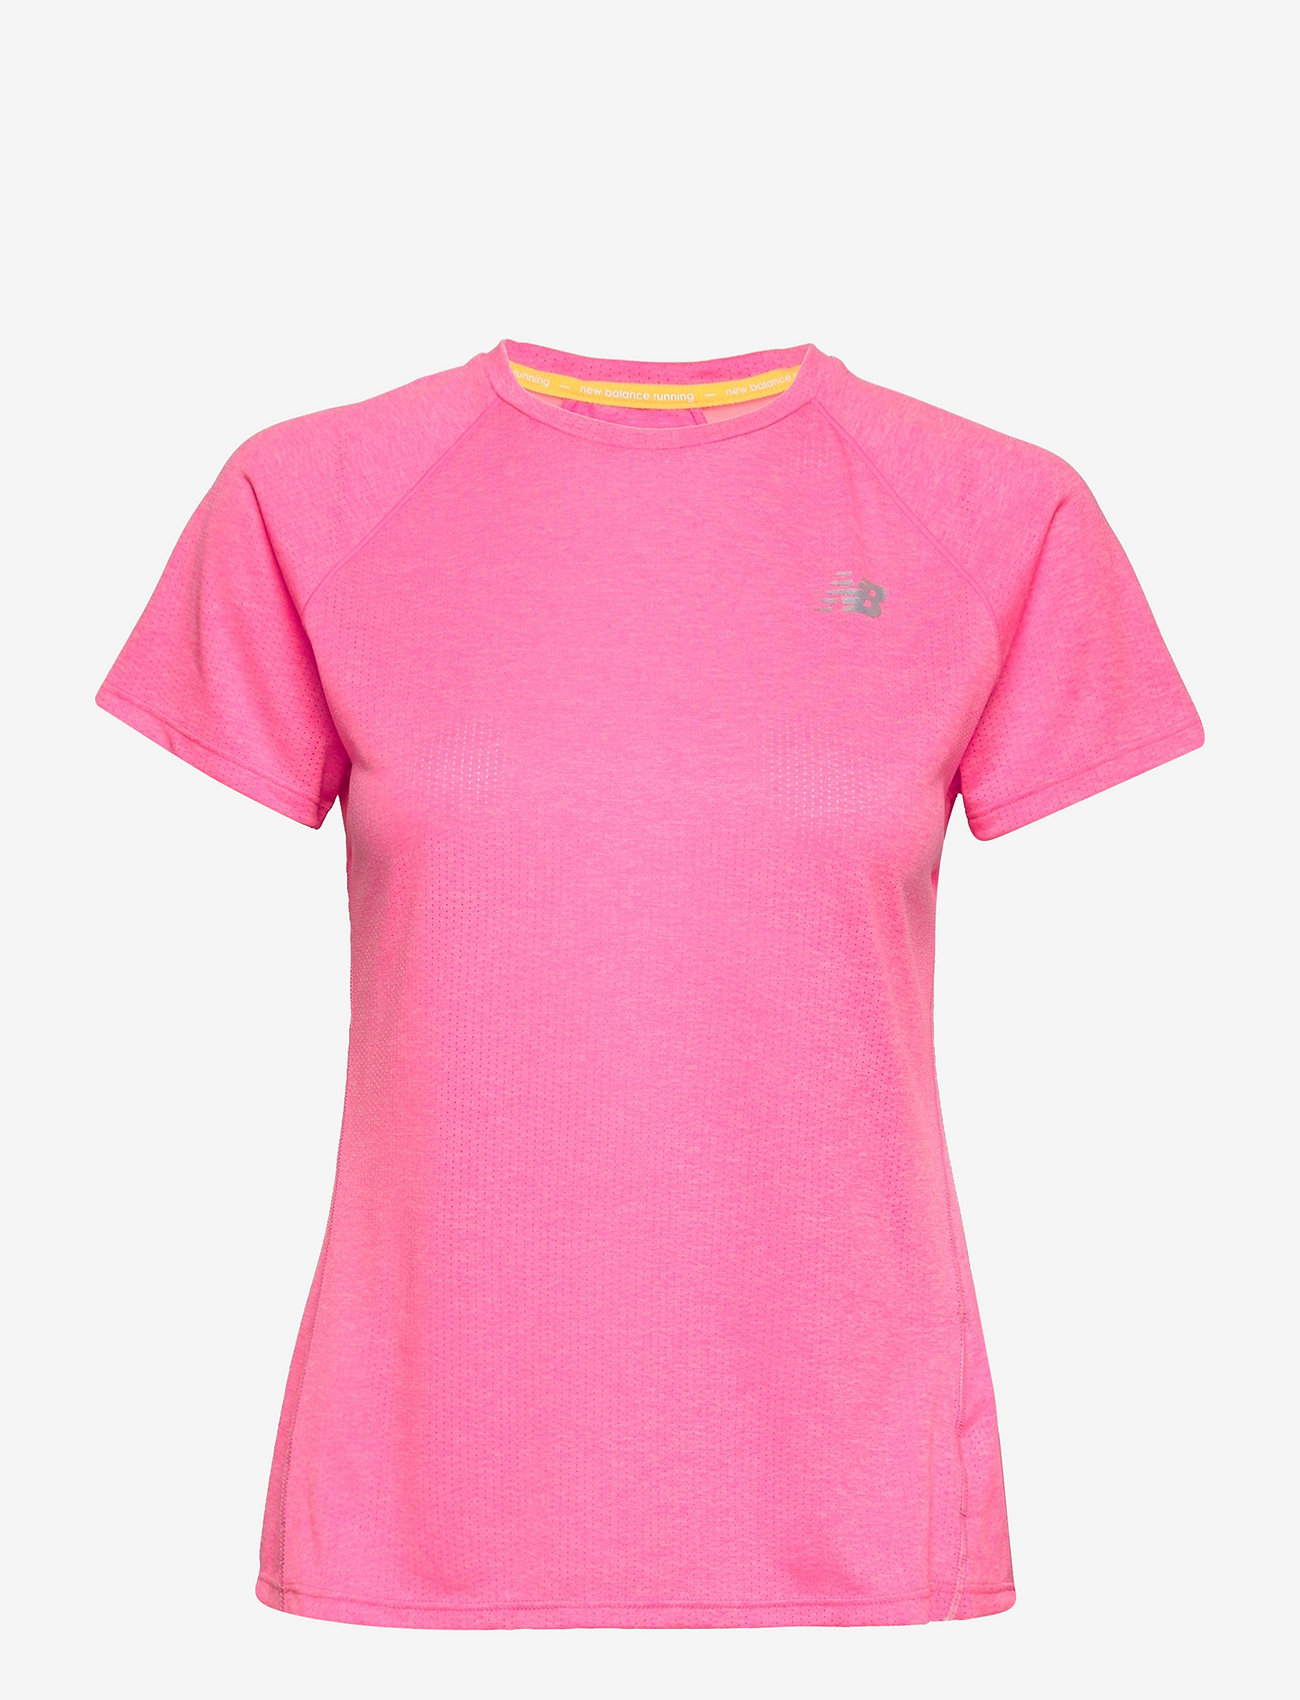 New Balance - Impact Run Short Sleeve - t-shirts & tops - vibrant pink heather - 0